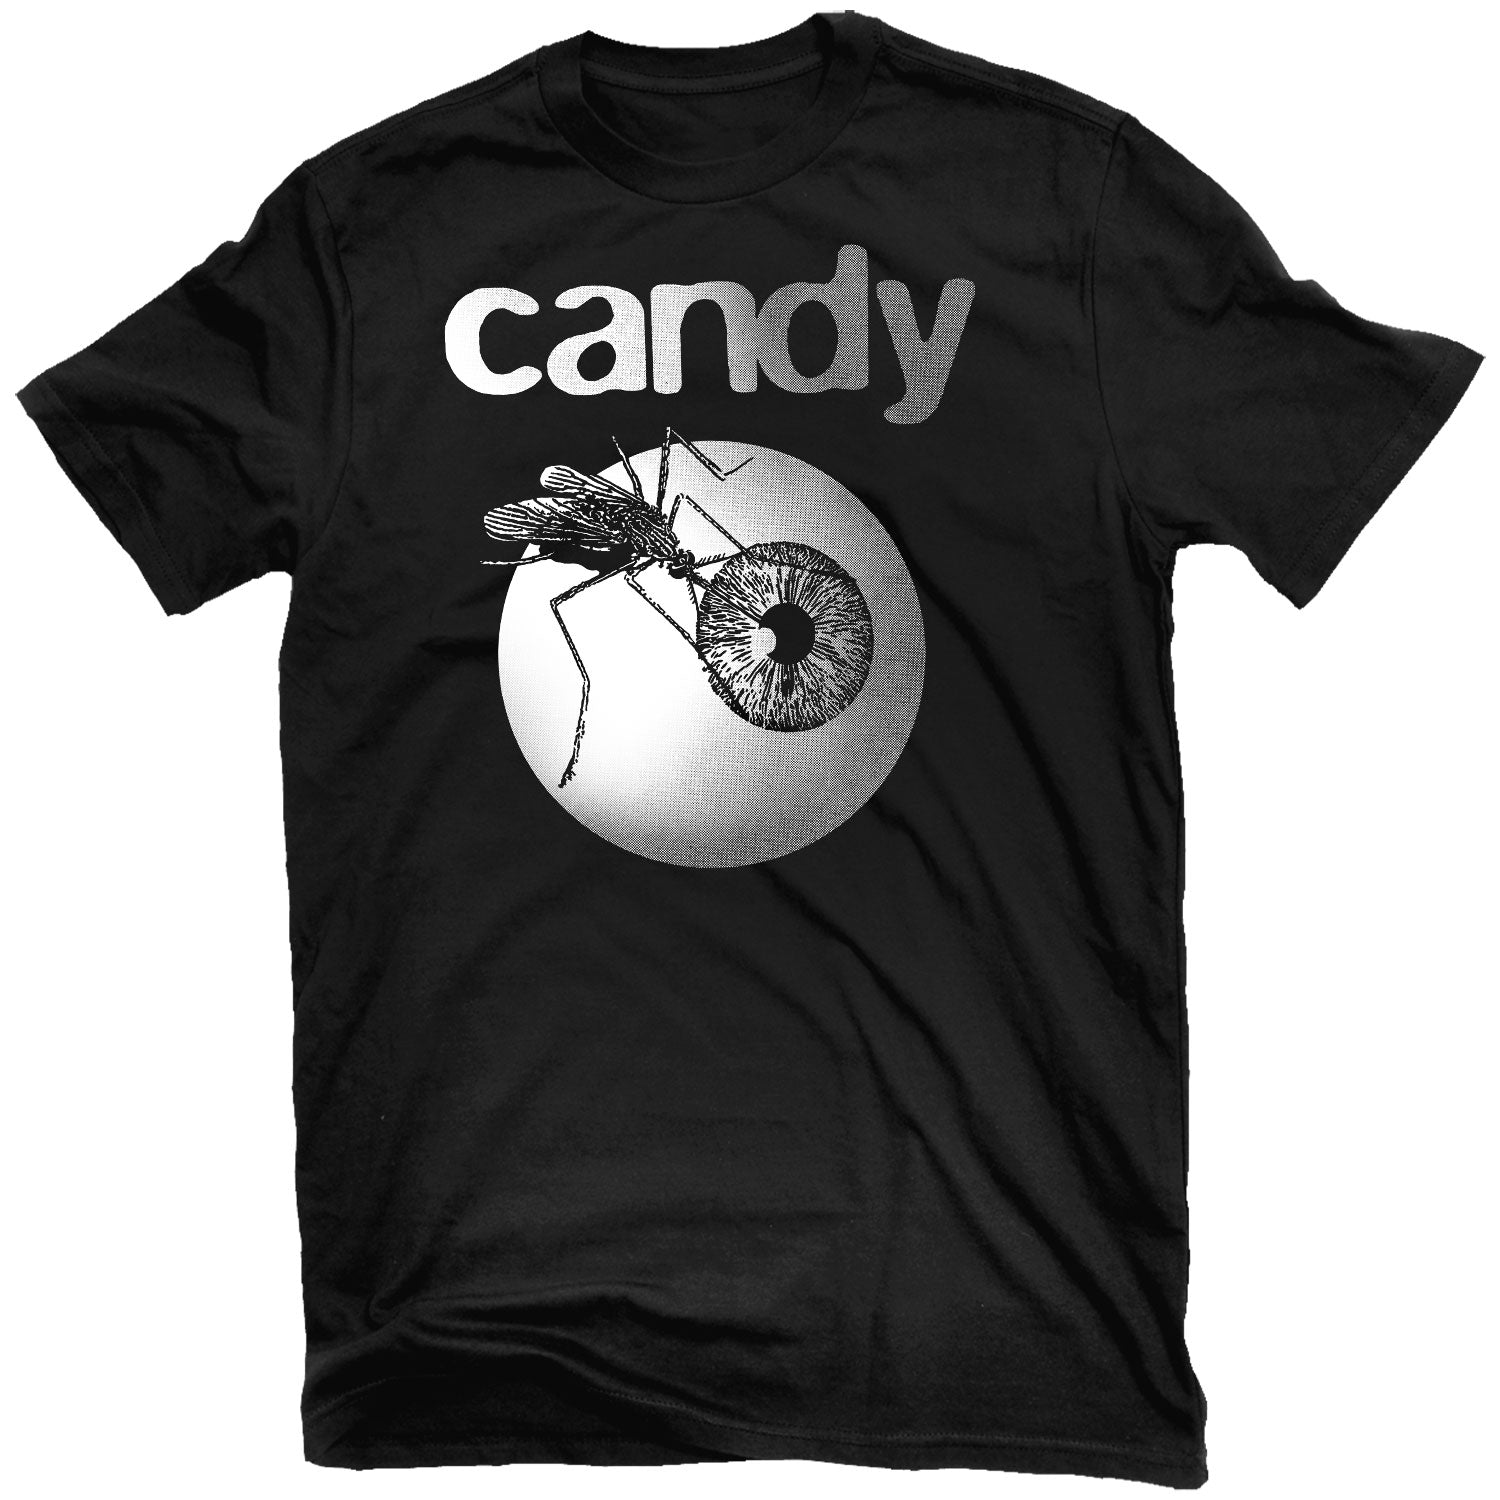 Candy "Super-Stare" T-Shirt